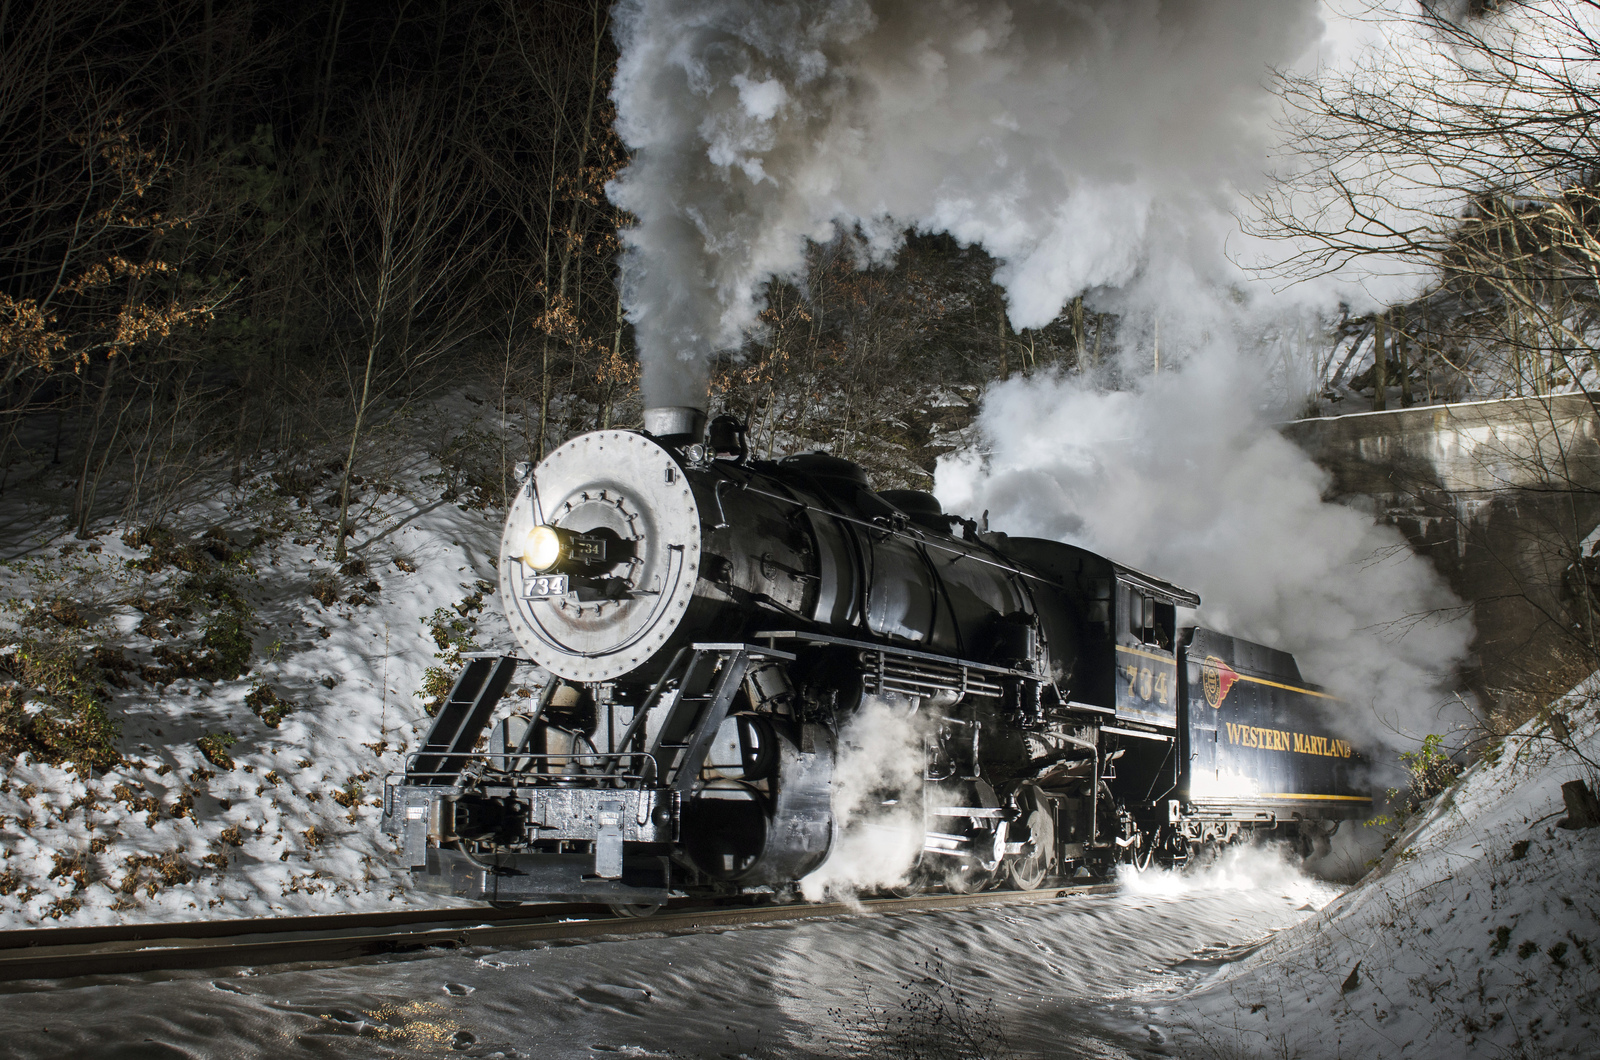 Western Maryland steam locomotive exits brush tunnel on a snowy night